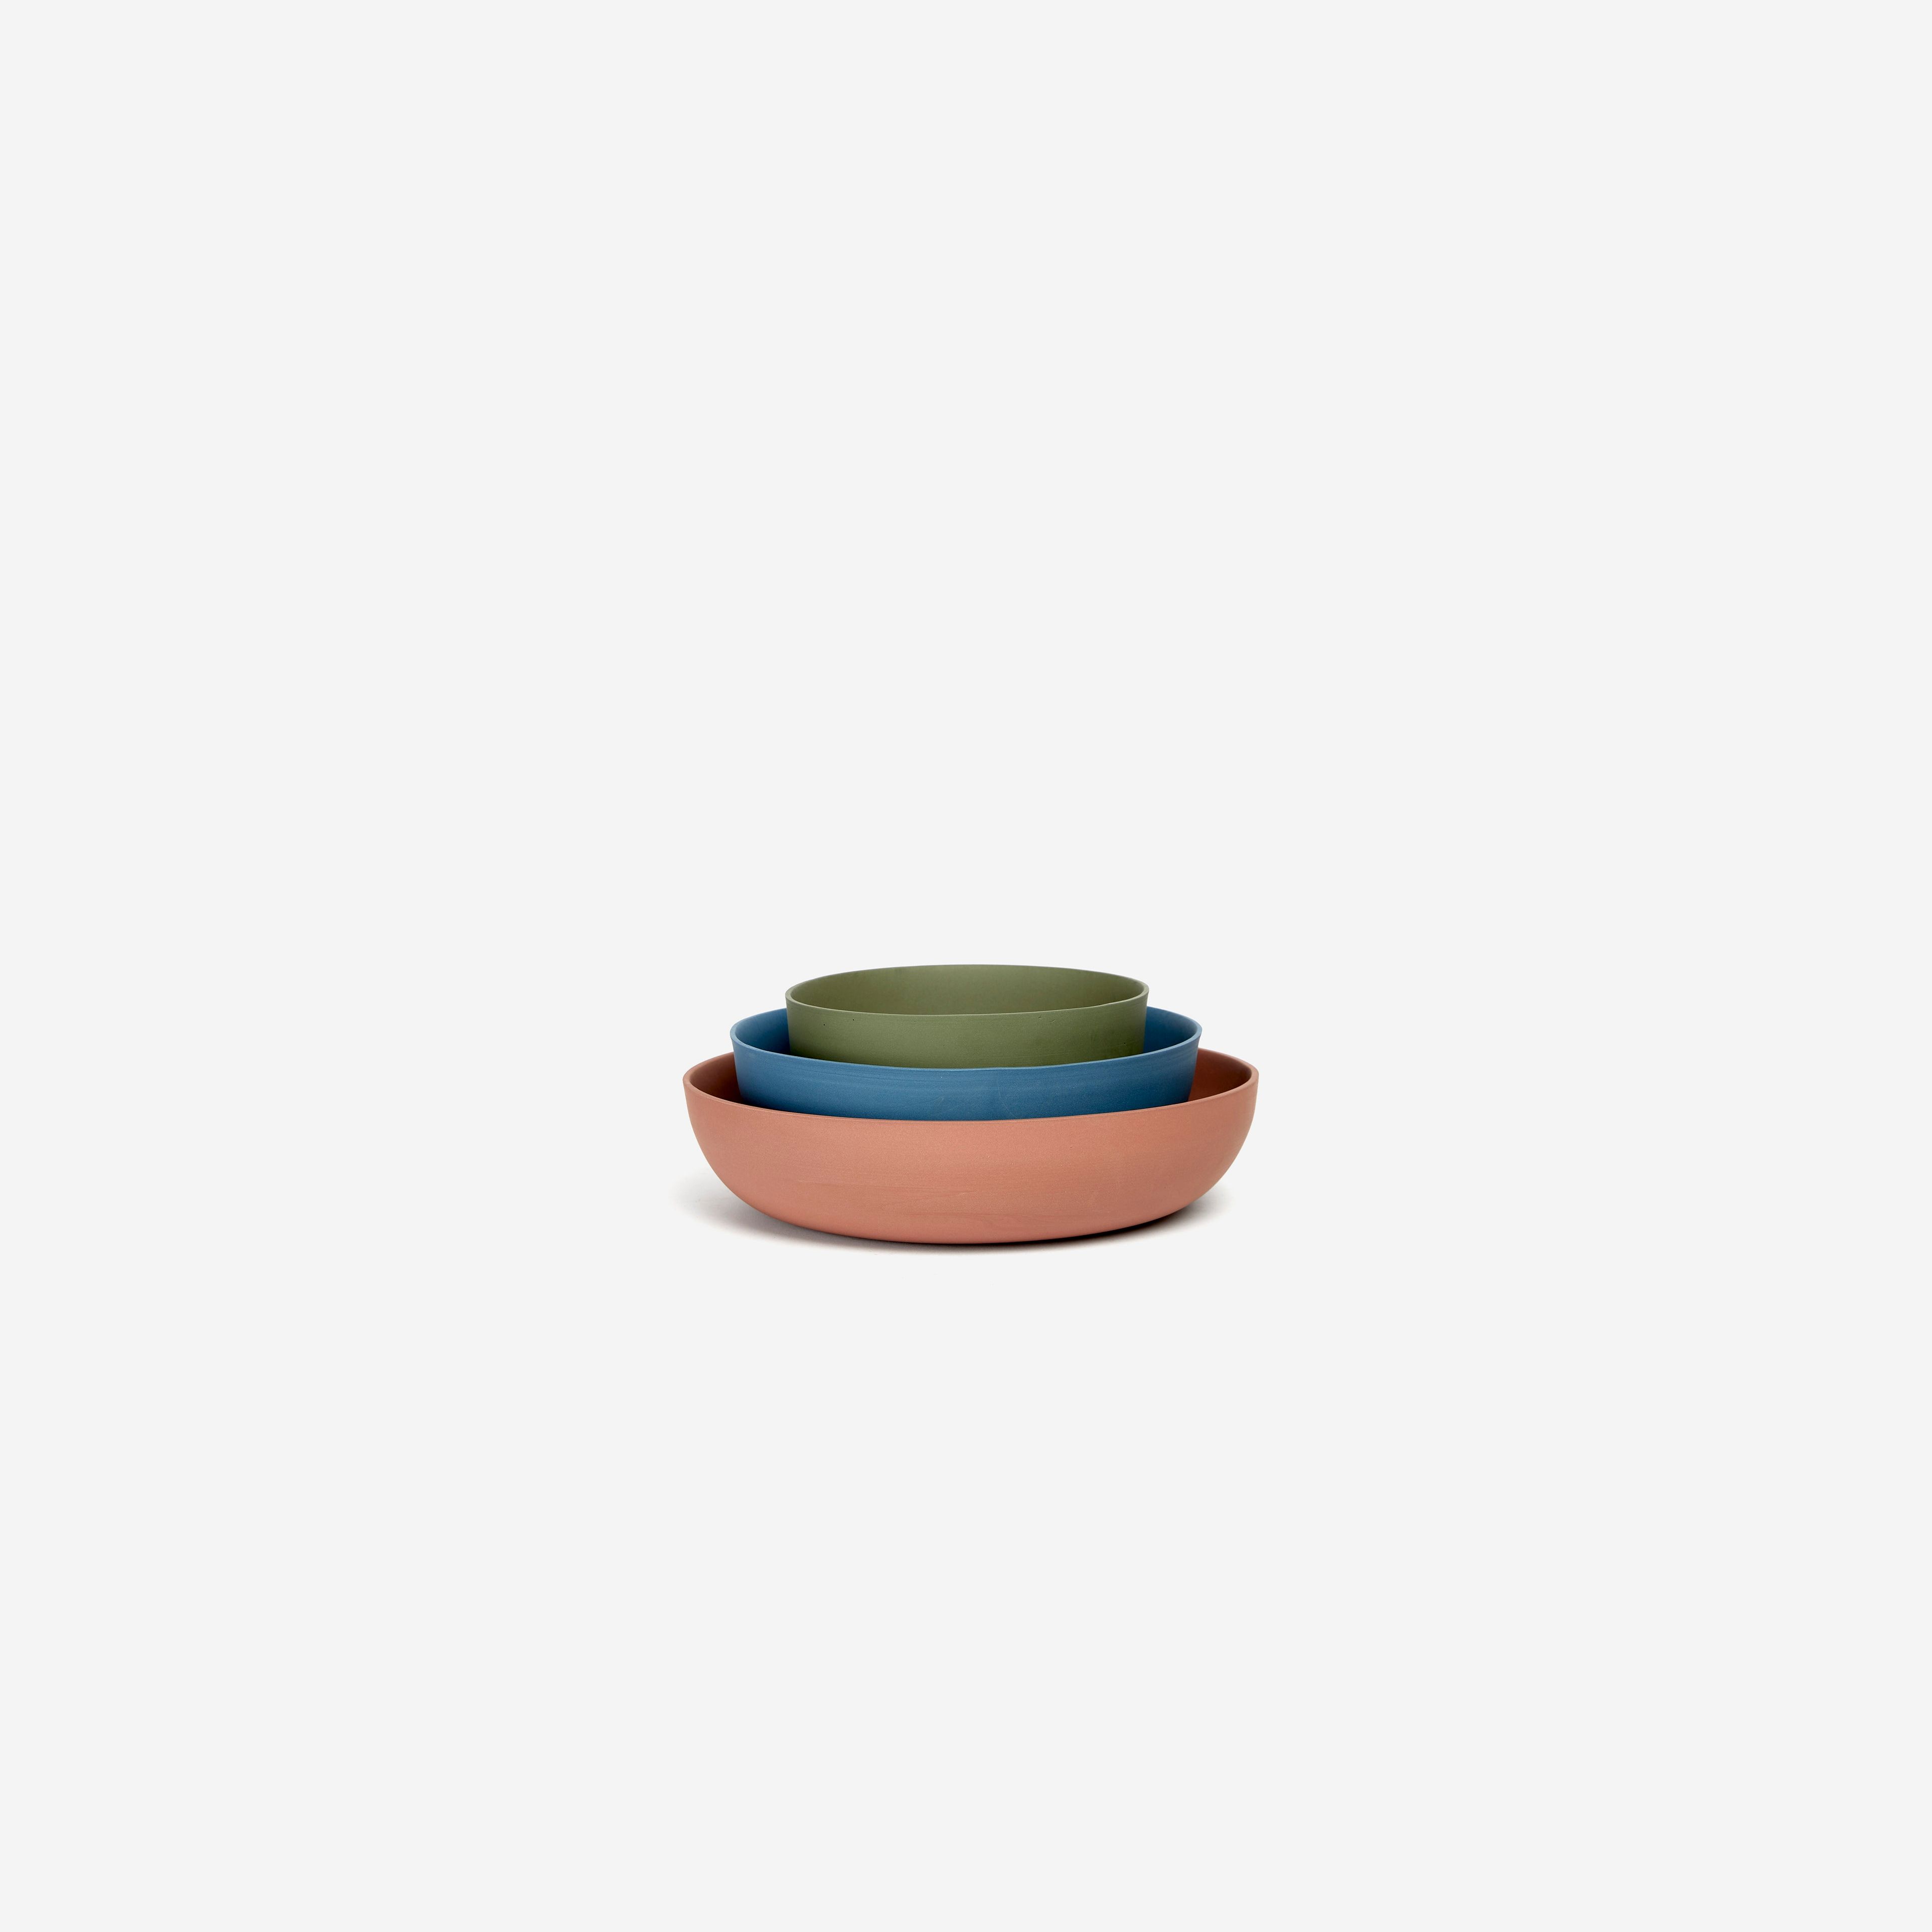 Commune Nesting Bowl Set -(Brown/Blue/Green)